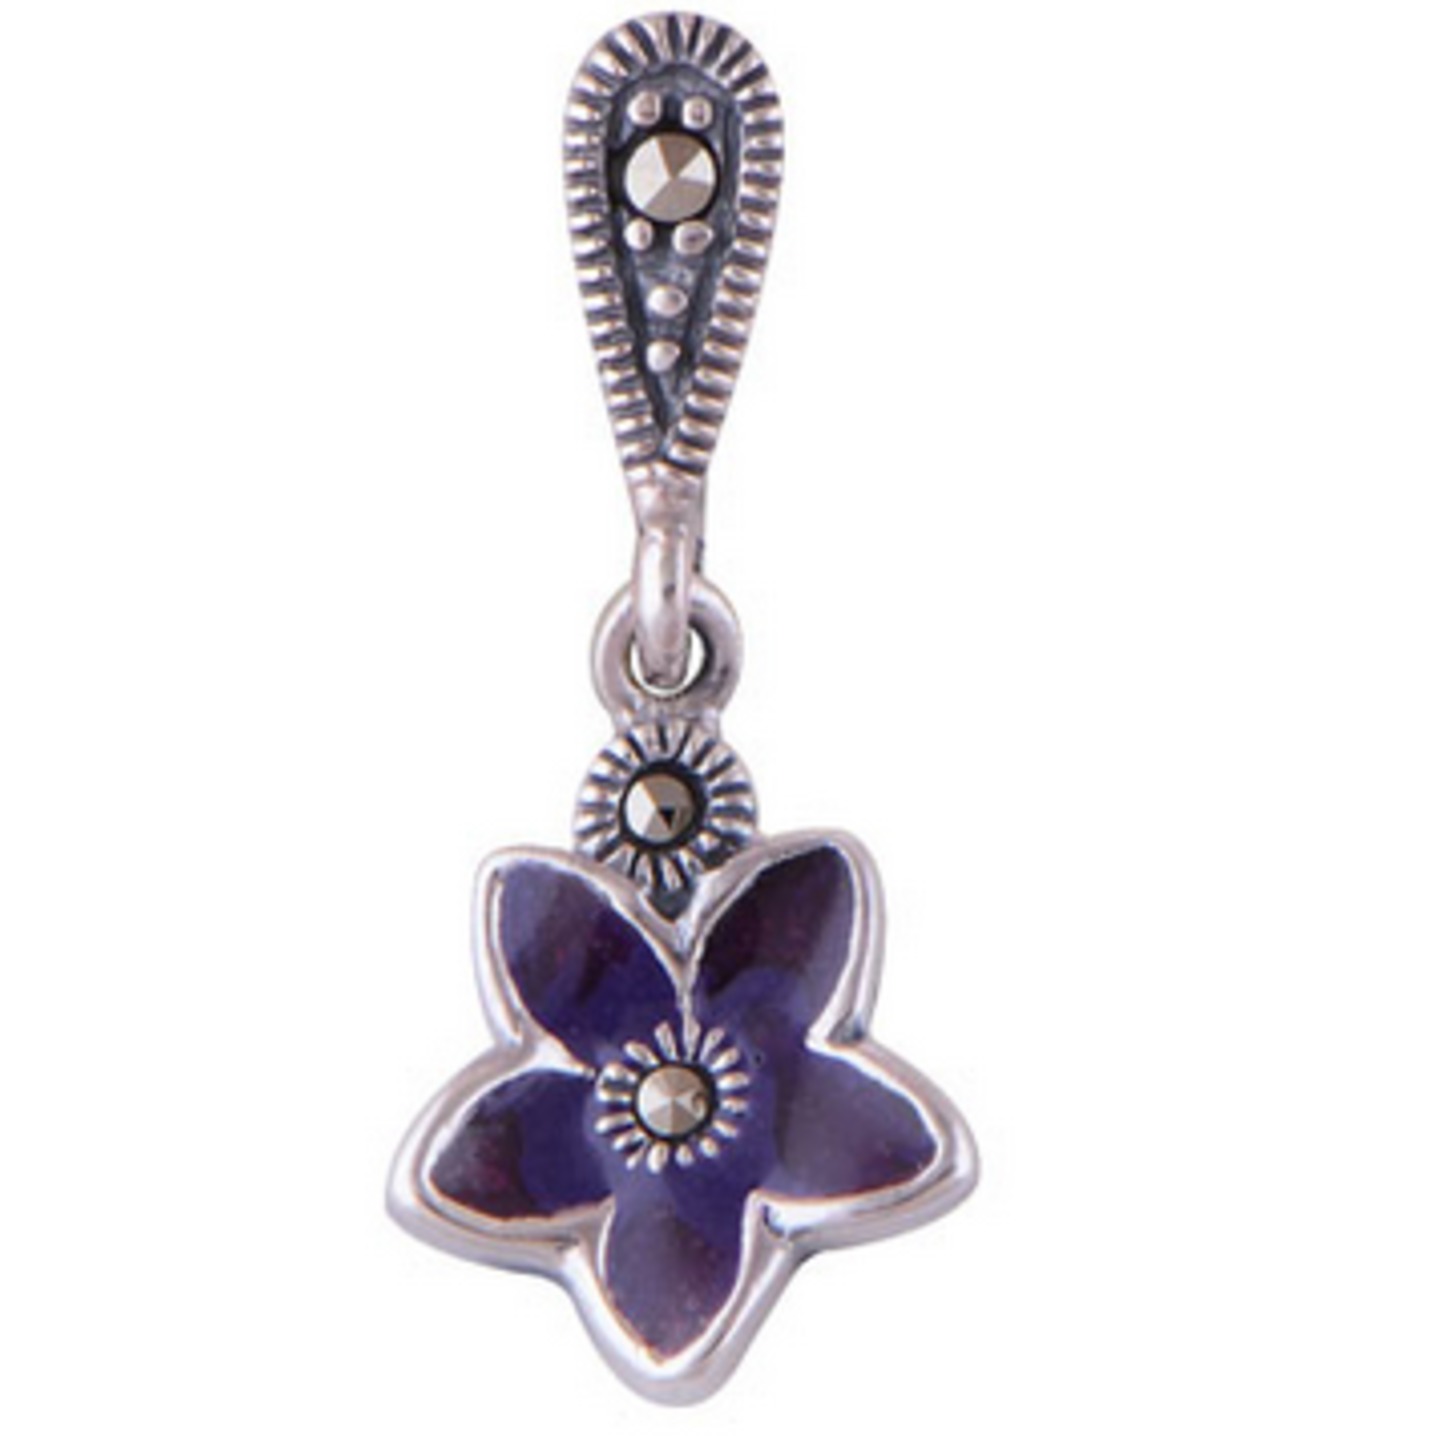 The Flower Enamel & Marcasite Silver Pendant